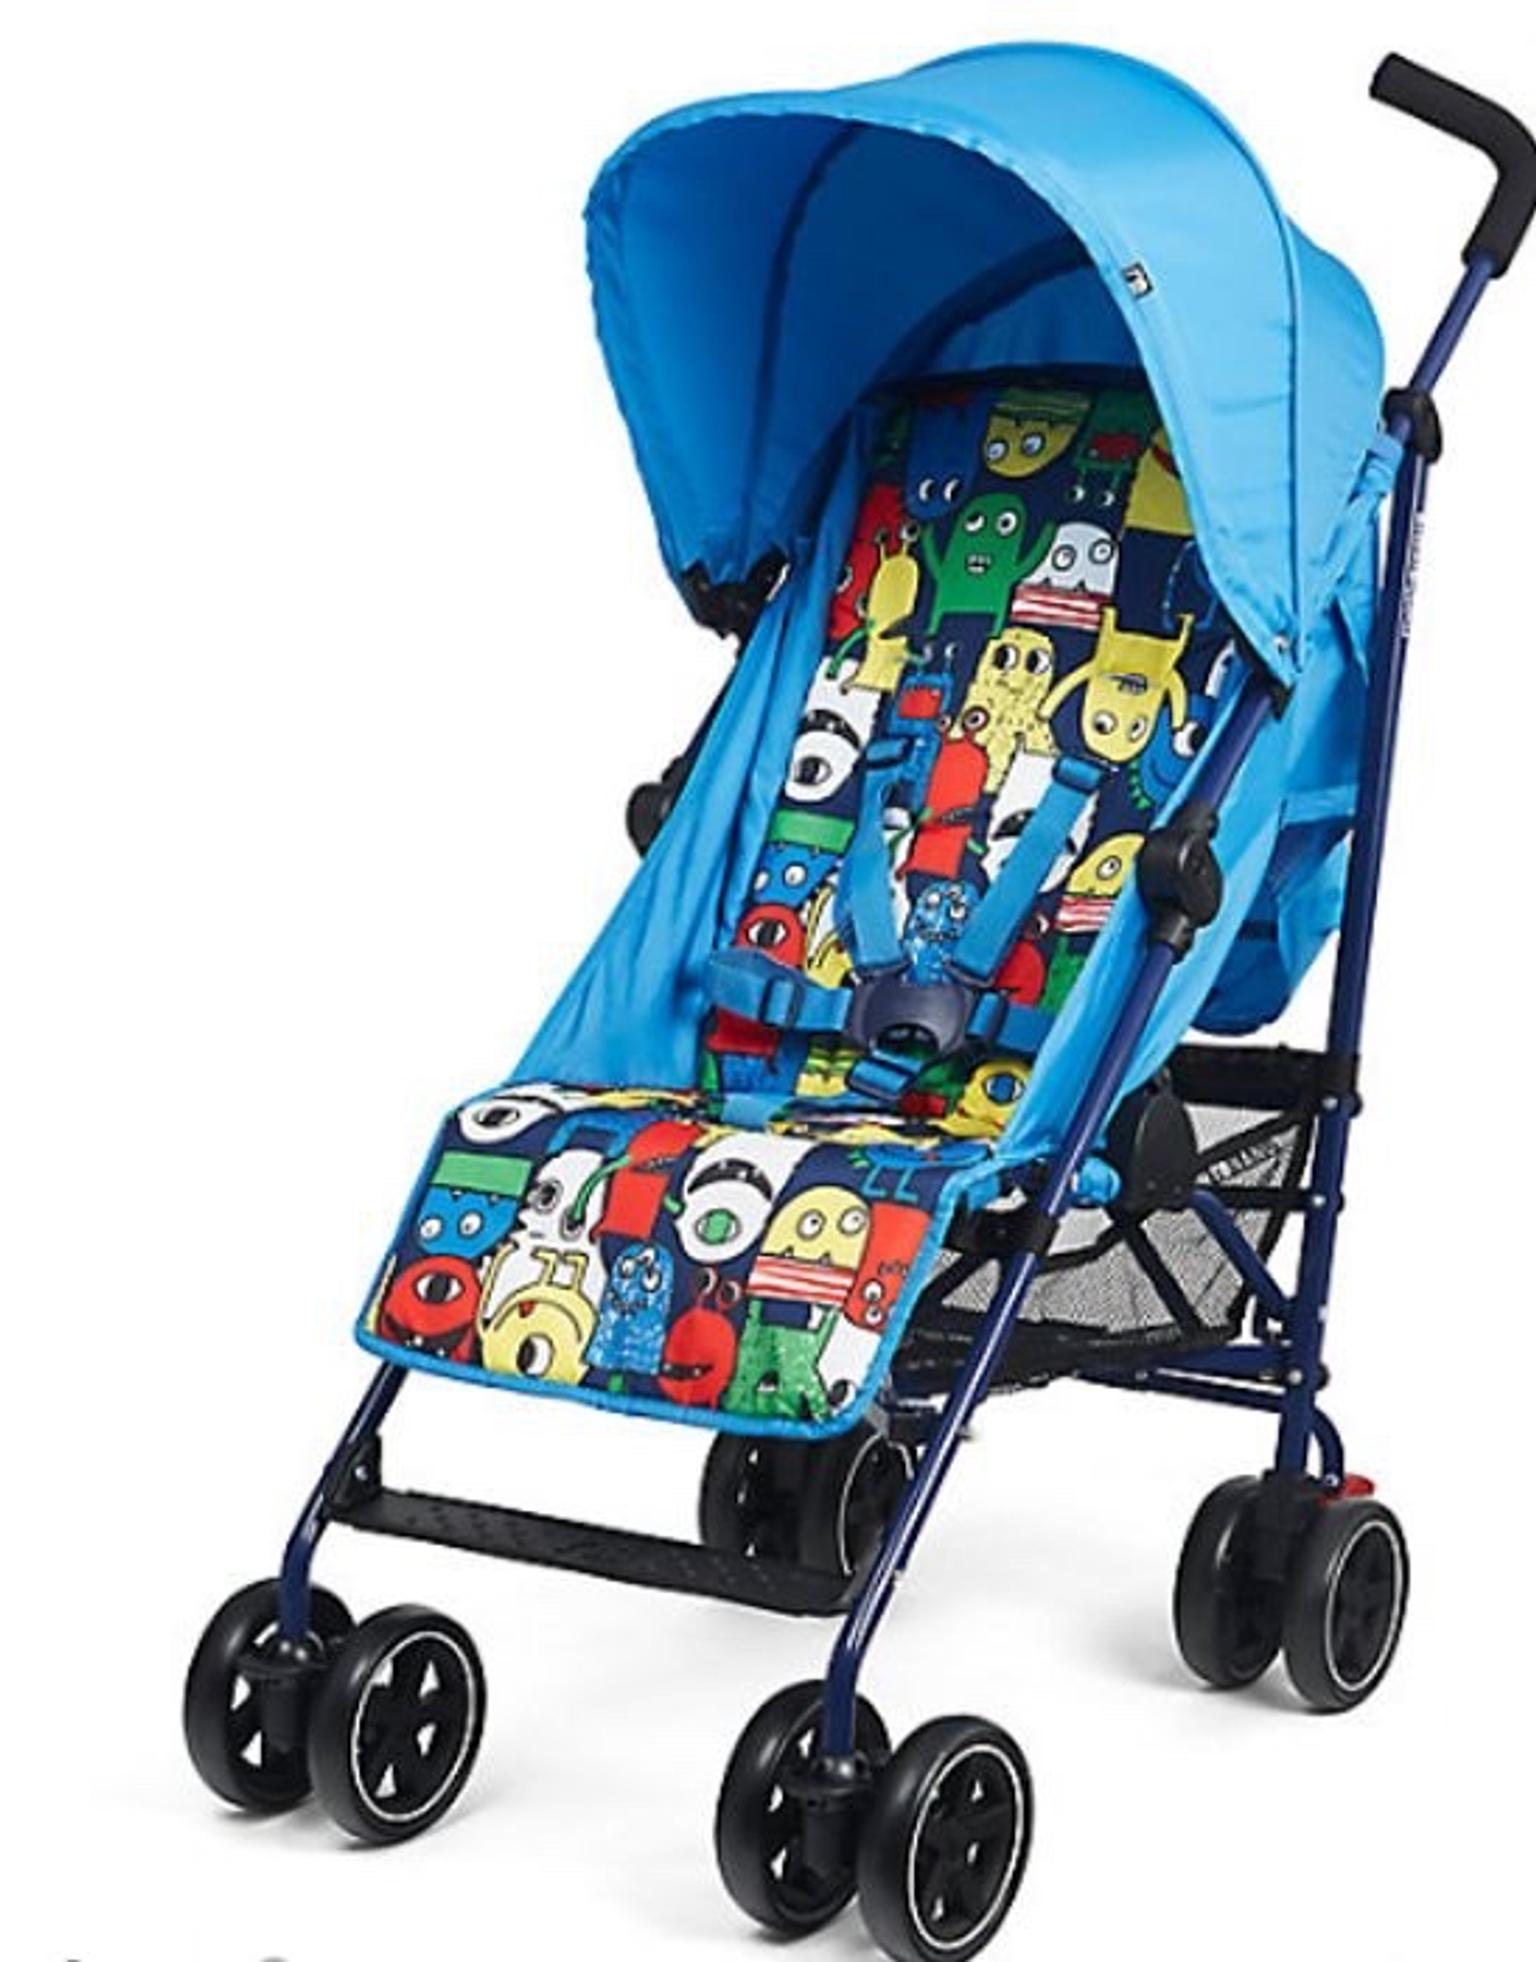 mothercare nanu stroller rain cover